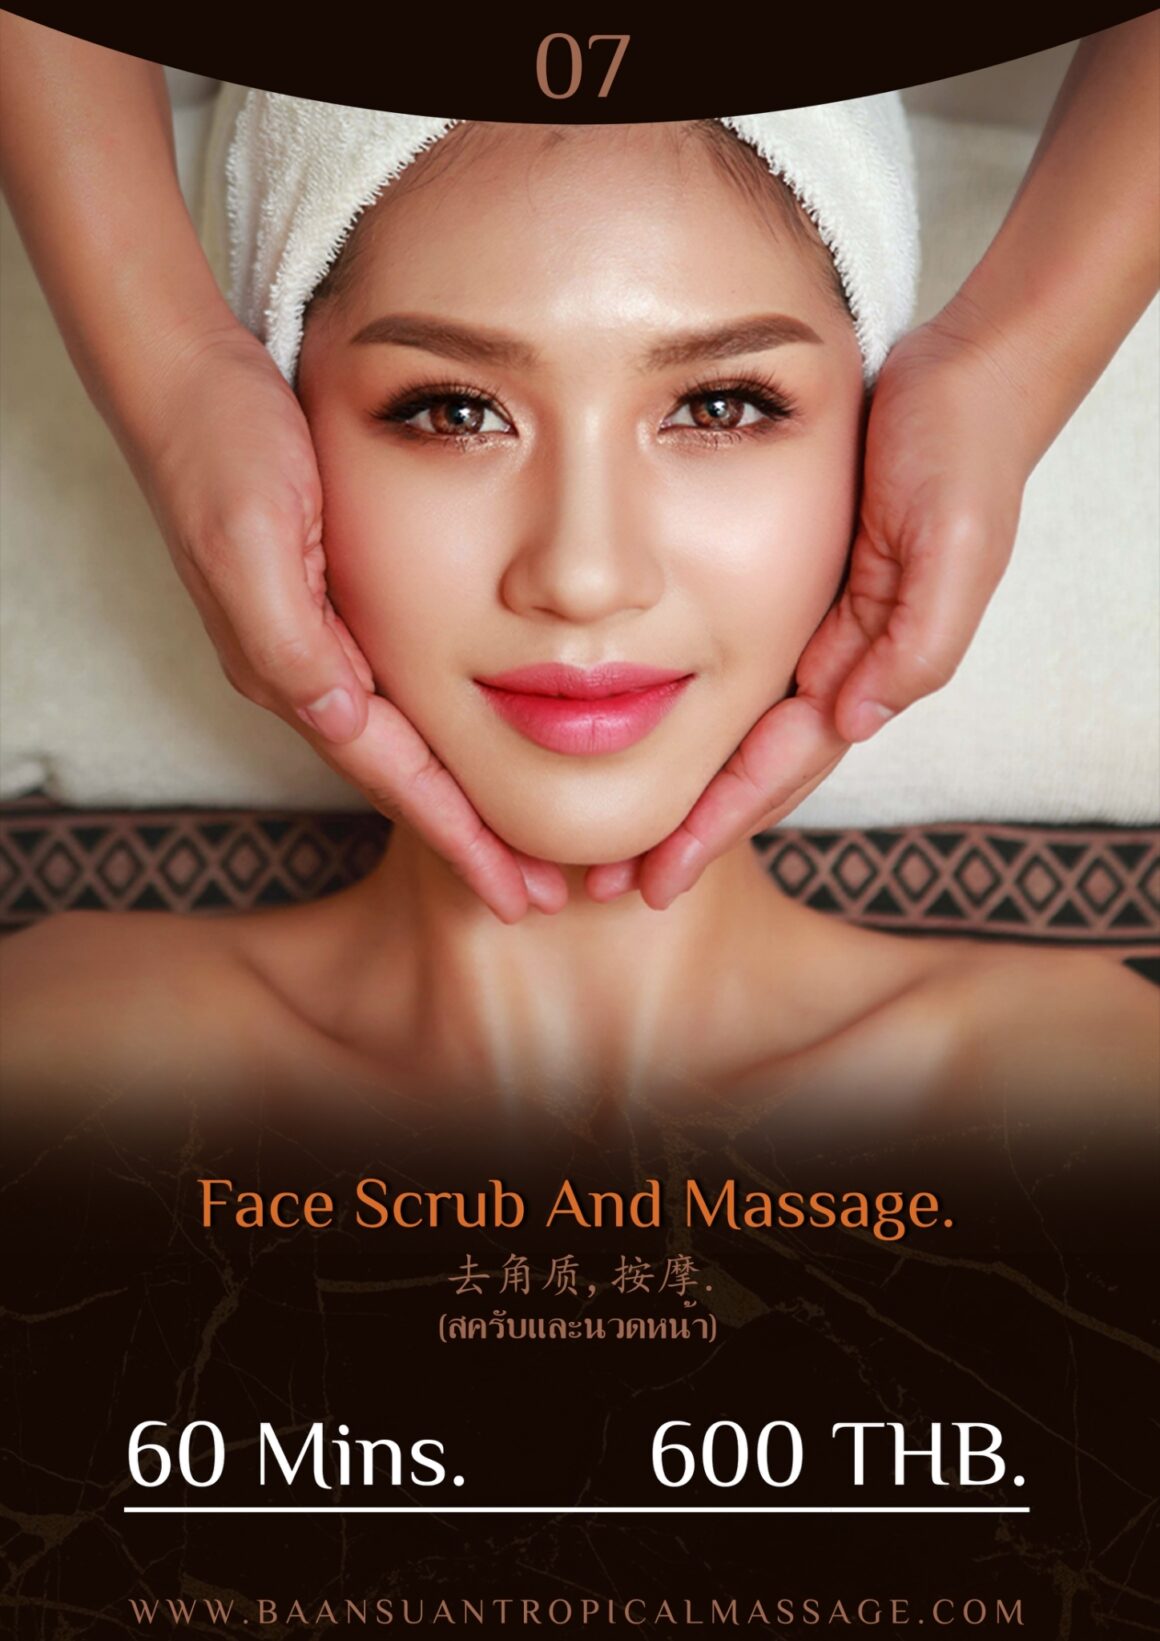 Face Scrub And Massage.